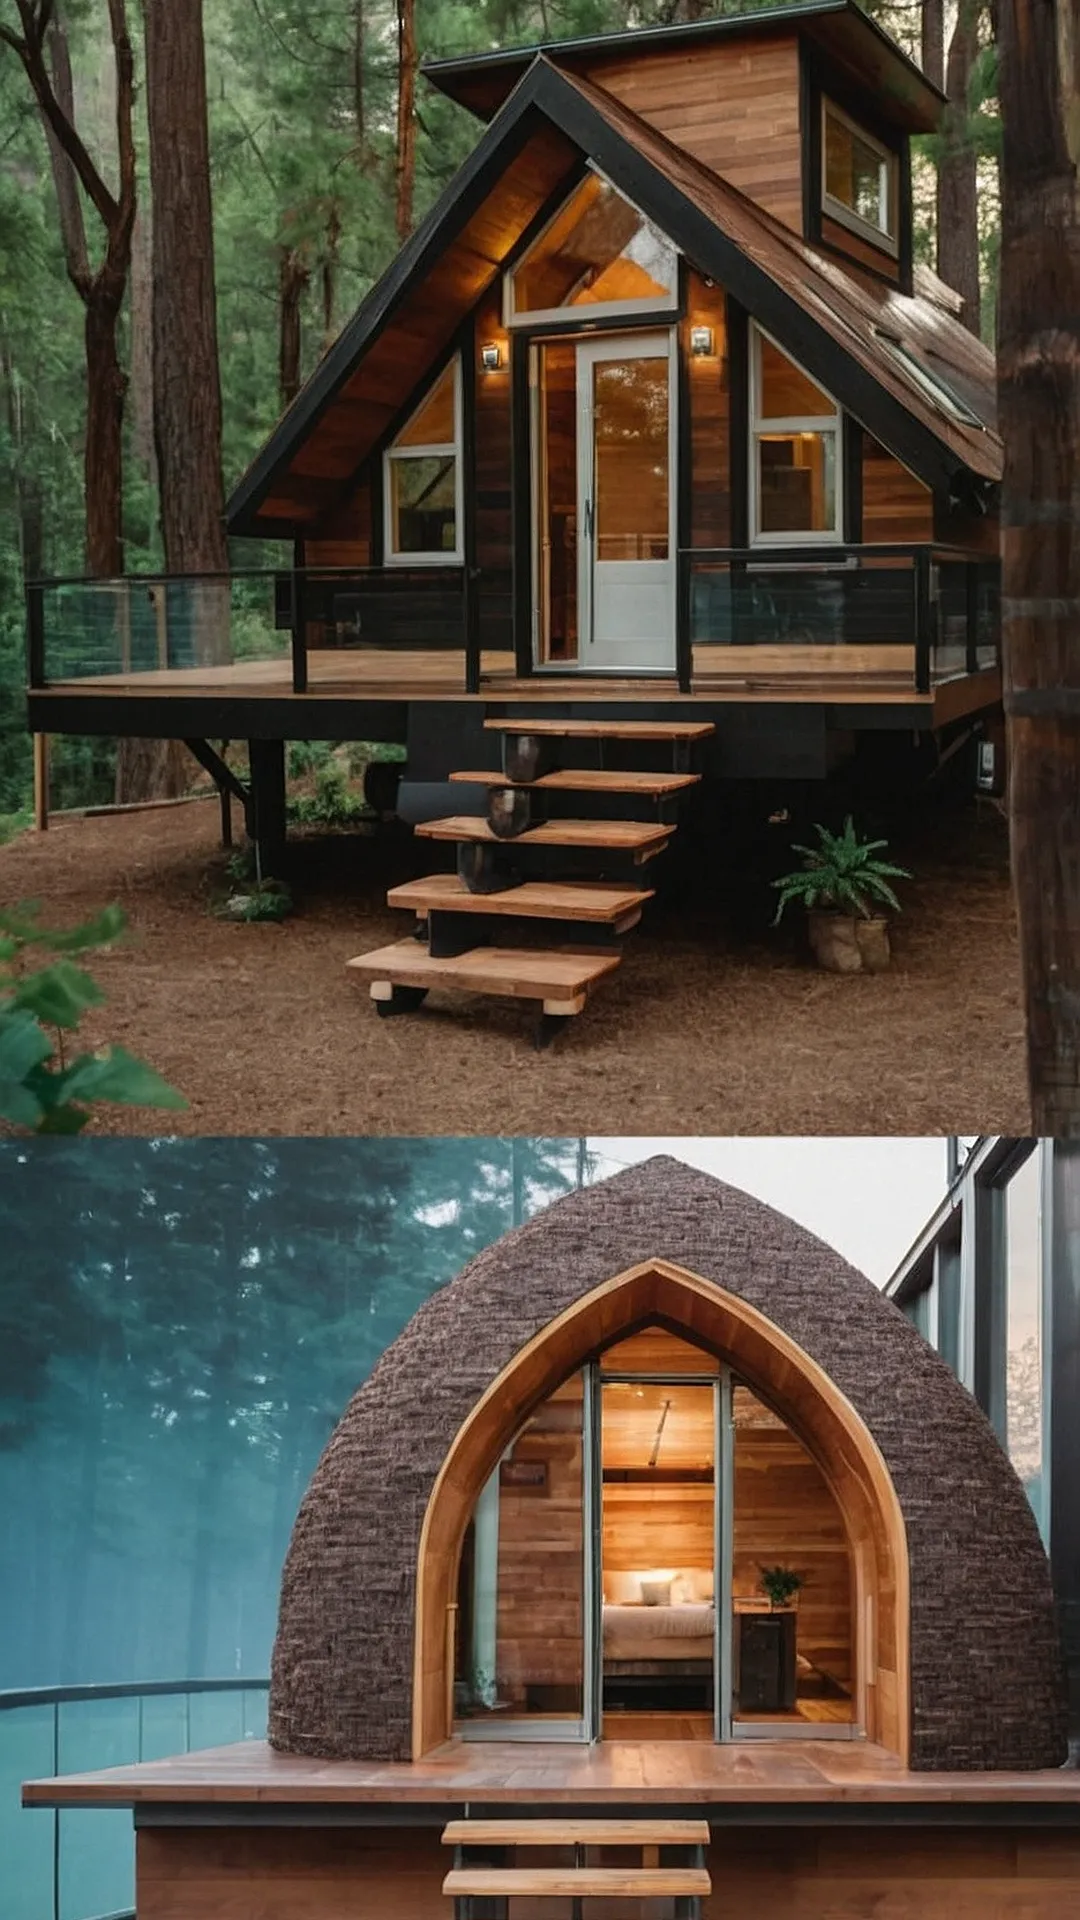 Sleek & Stylish: Cutting-Edge Tiny House Concepts